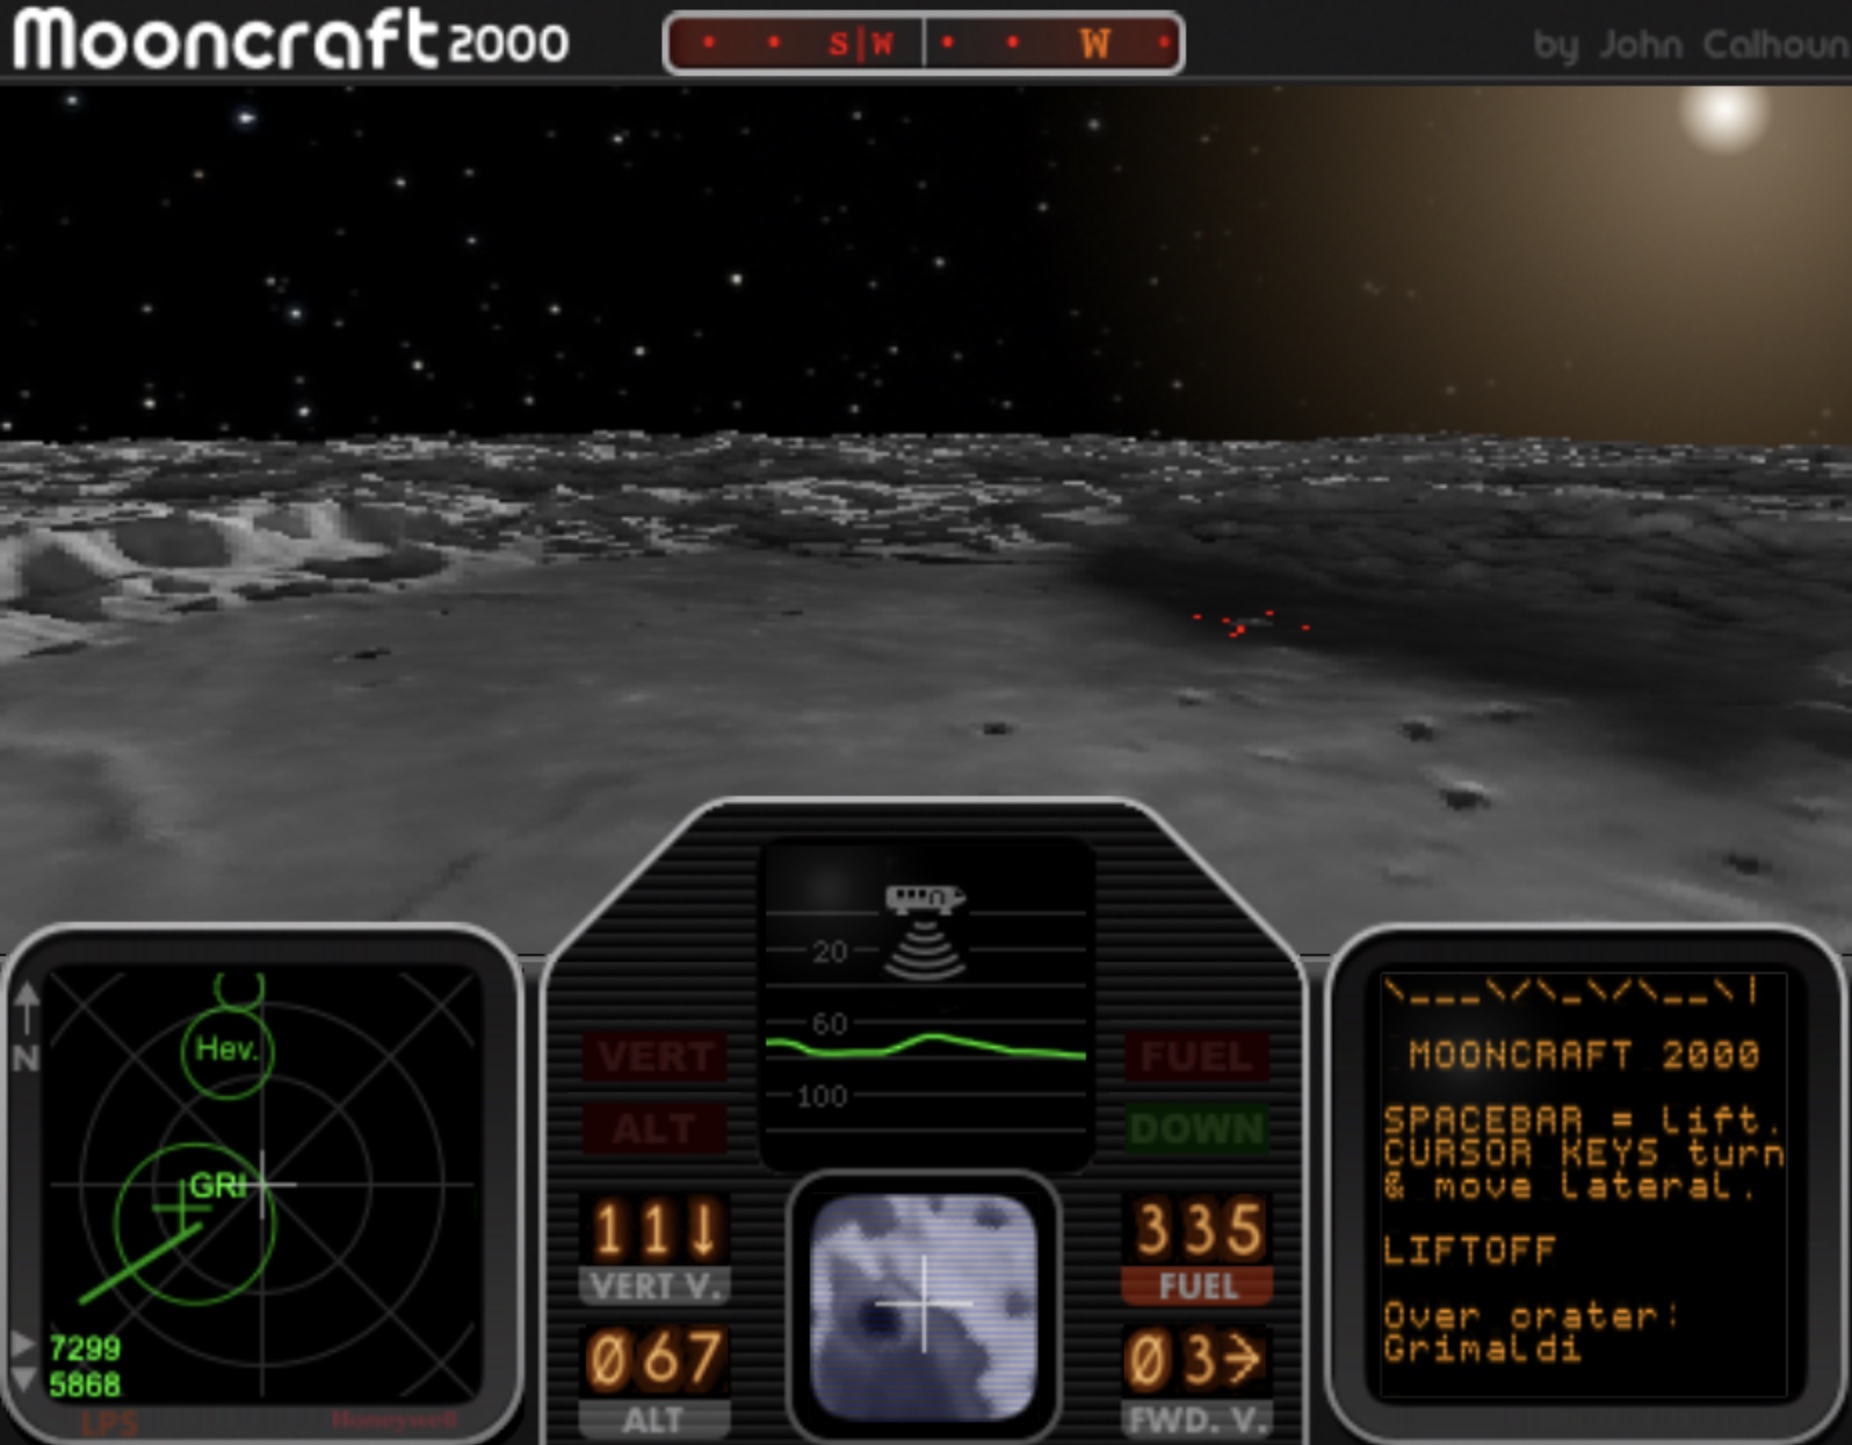 Mooncraft 2000 screenshot.